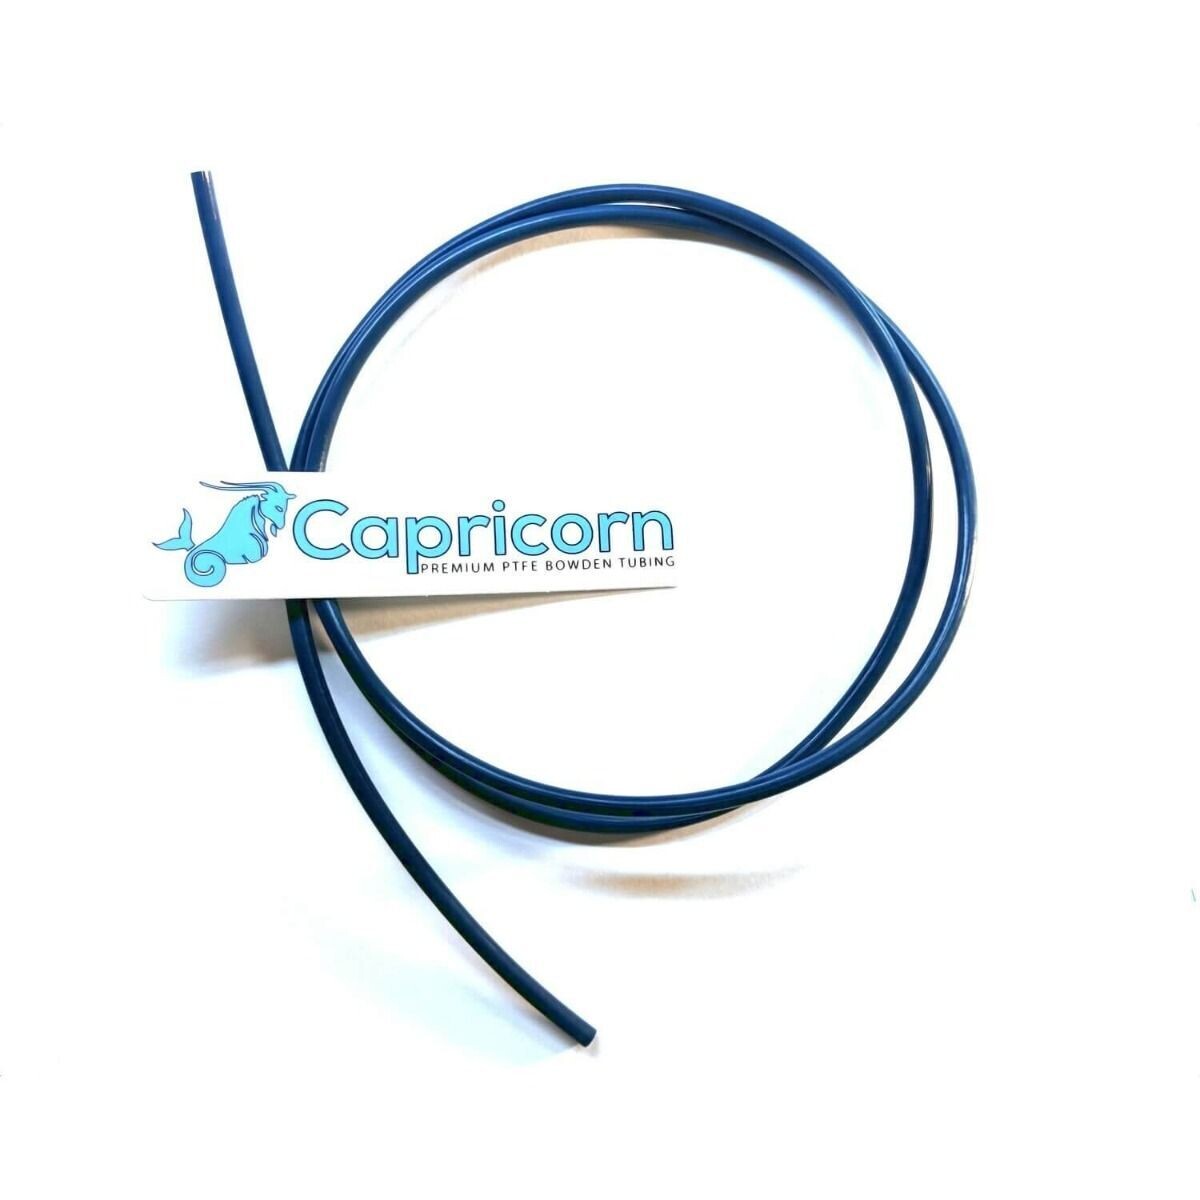 Capricorn XS PTFE Tube 1.75mm- 1m - Access